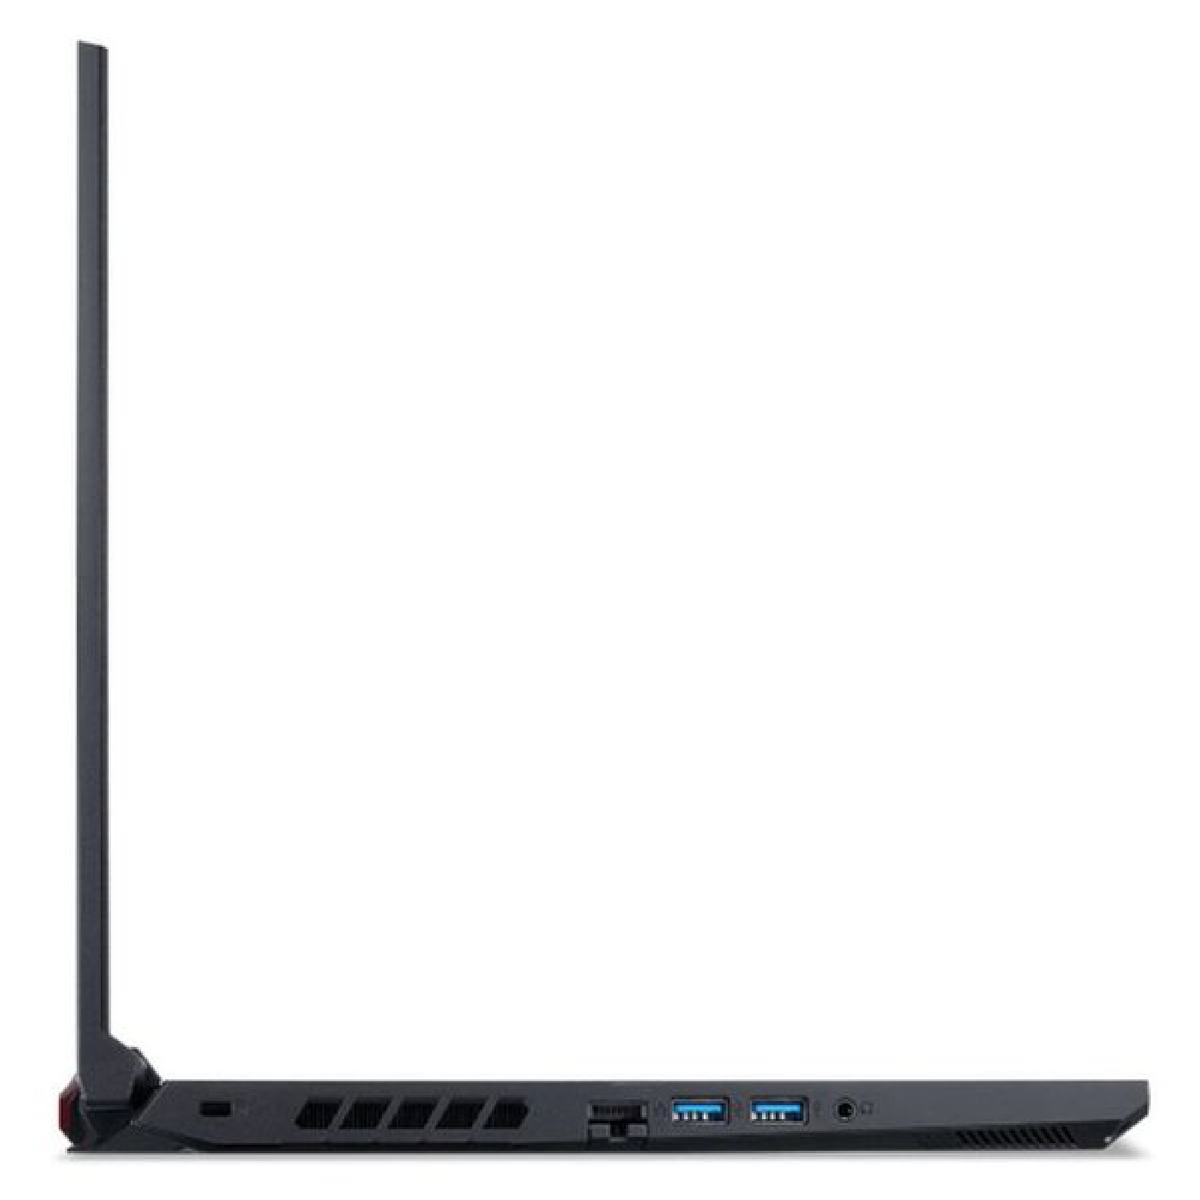 Acer Nitro 5 (AN515-55-72UN) Gaming Laptop,Intel Core i7-10750H,16GB RAM,1TB SSD,15.6"FHD,NVIDIA(R) GeForce GTX 1650 4GB,Windows 10,Obsidian Black